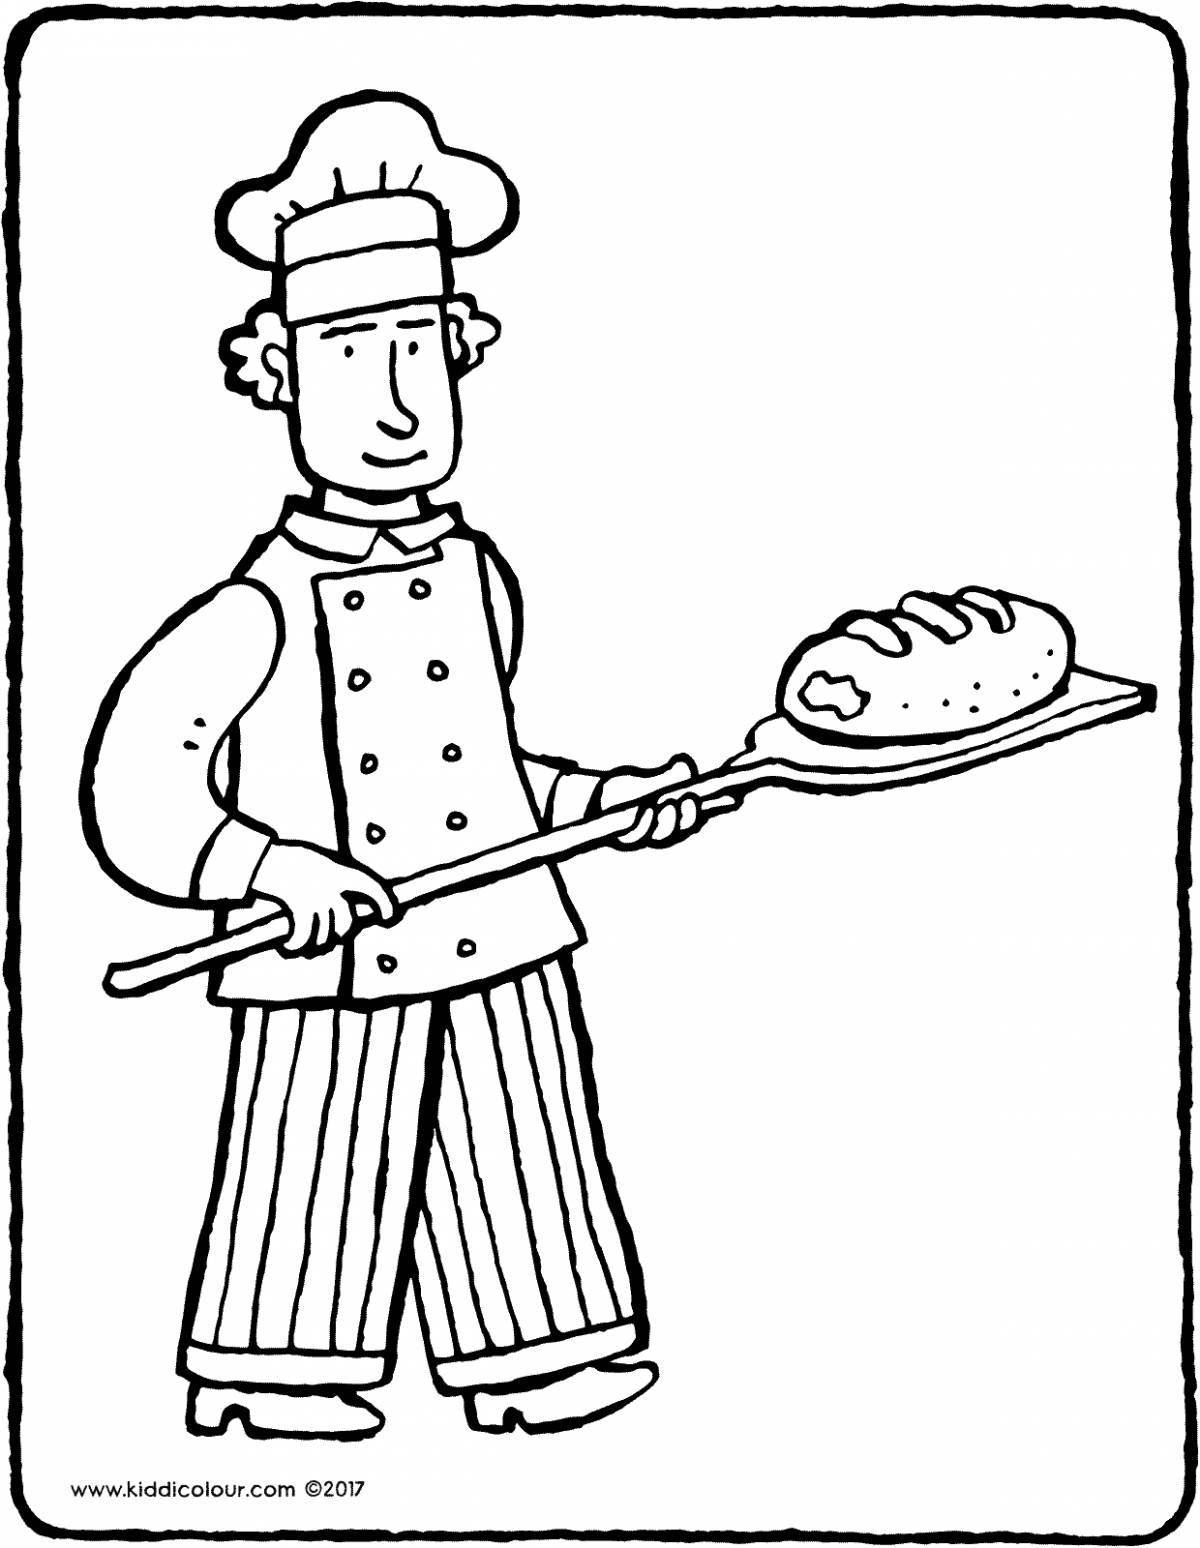 Раскраска радостный пекарь печет хлеб